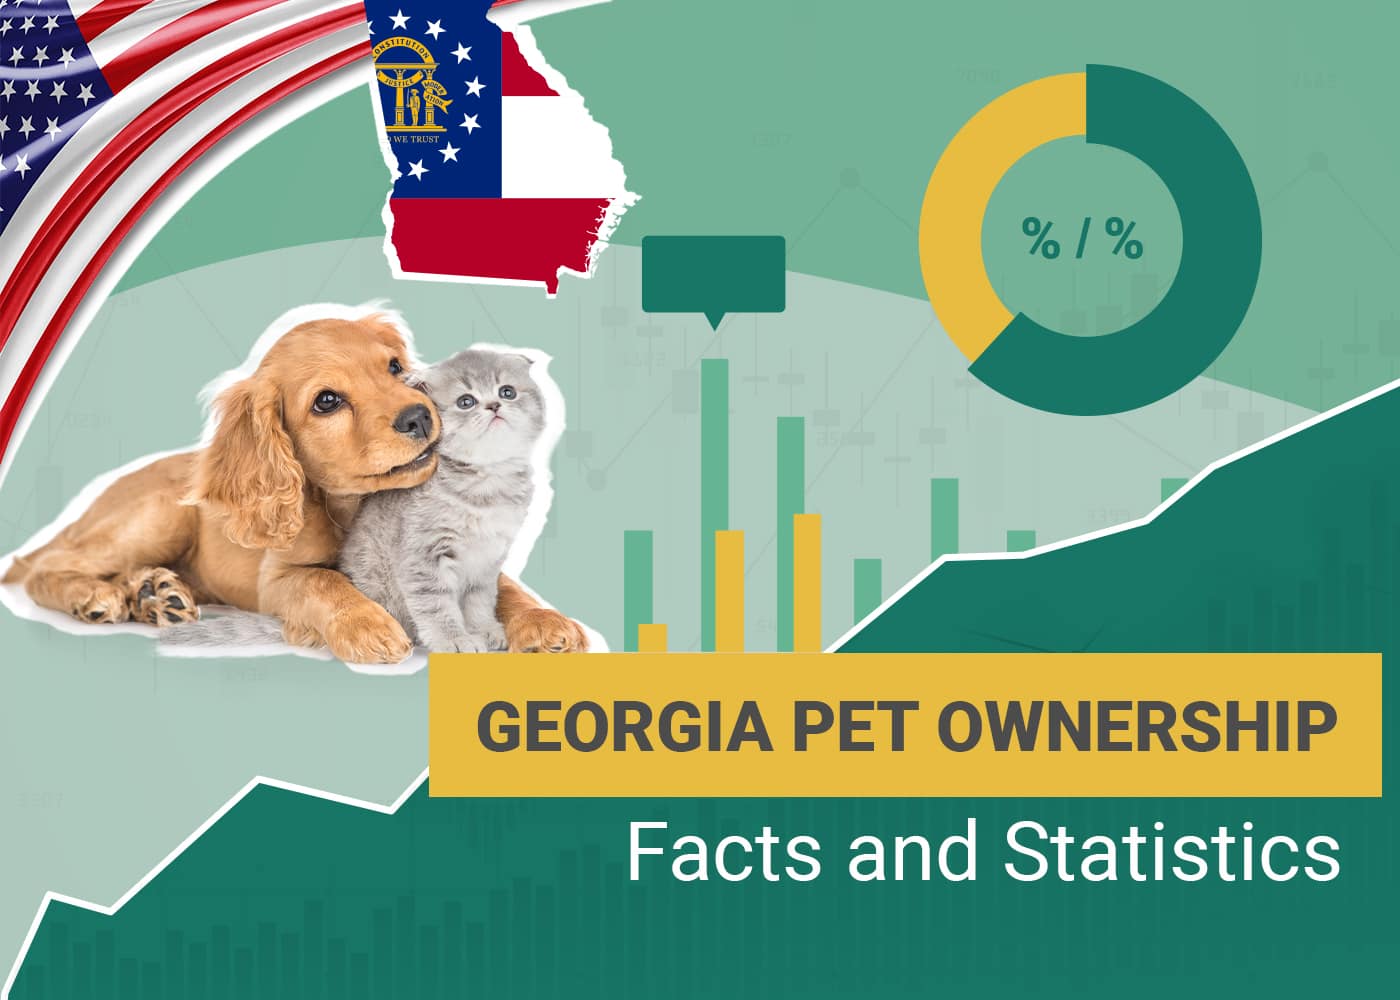 Georgia Pet Ownership Facts and Statistics